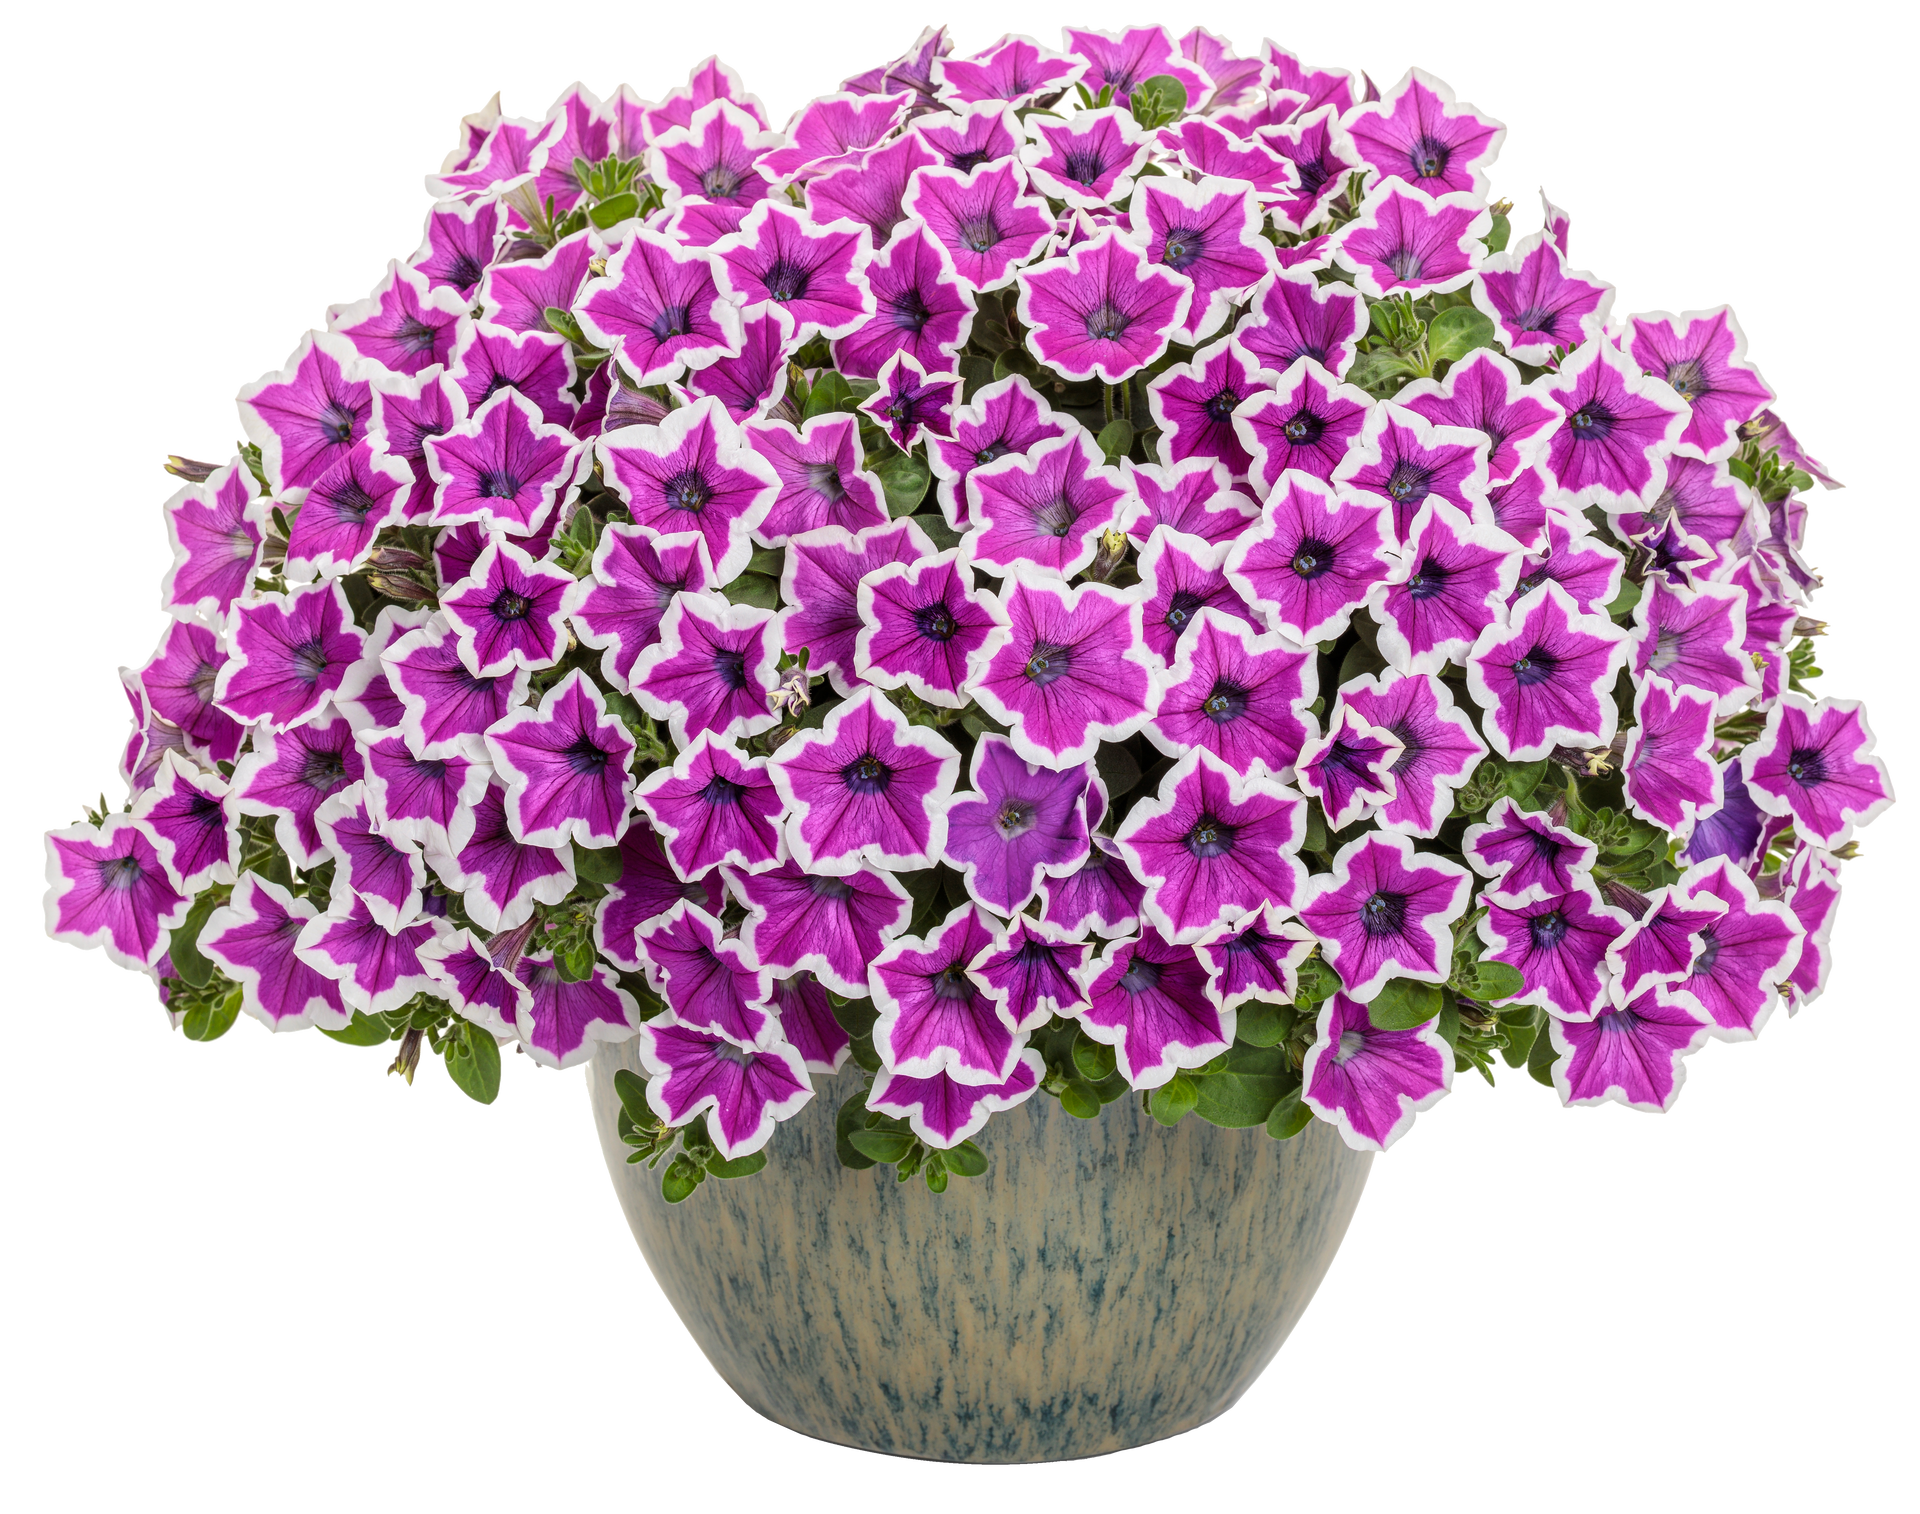 Proven Winner Petunia Supertunia Lovie Dovie flower for sale in Lebanon PA